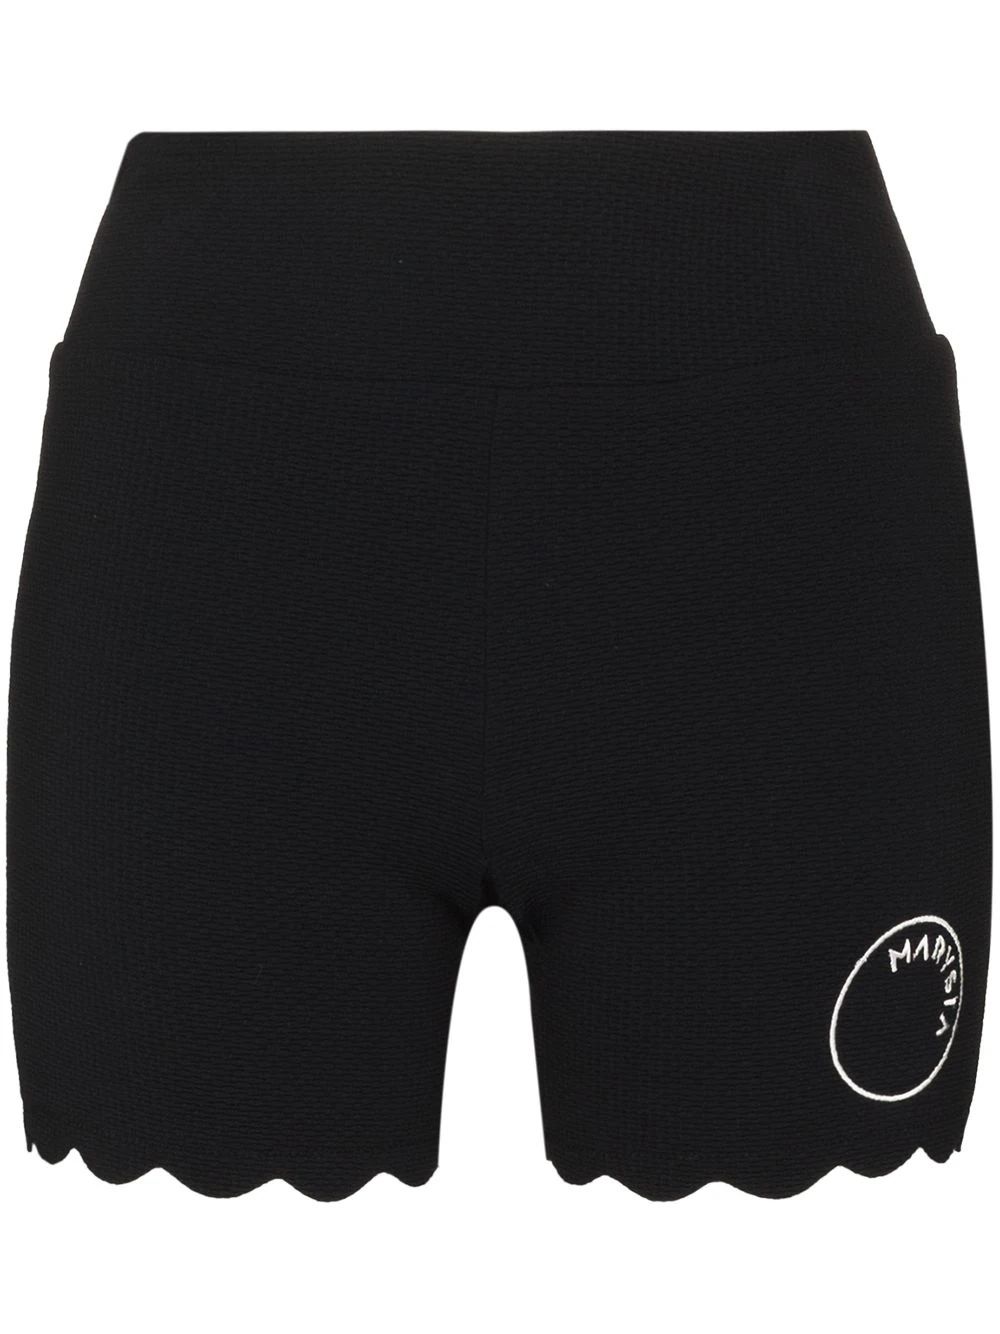 Billie Jean shorts | Farfetch Global